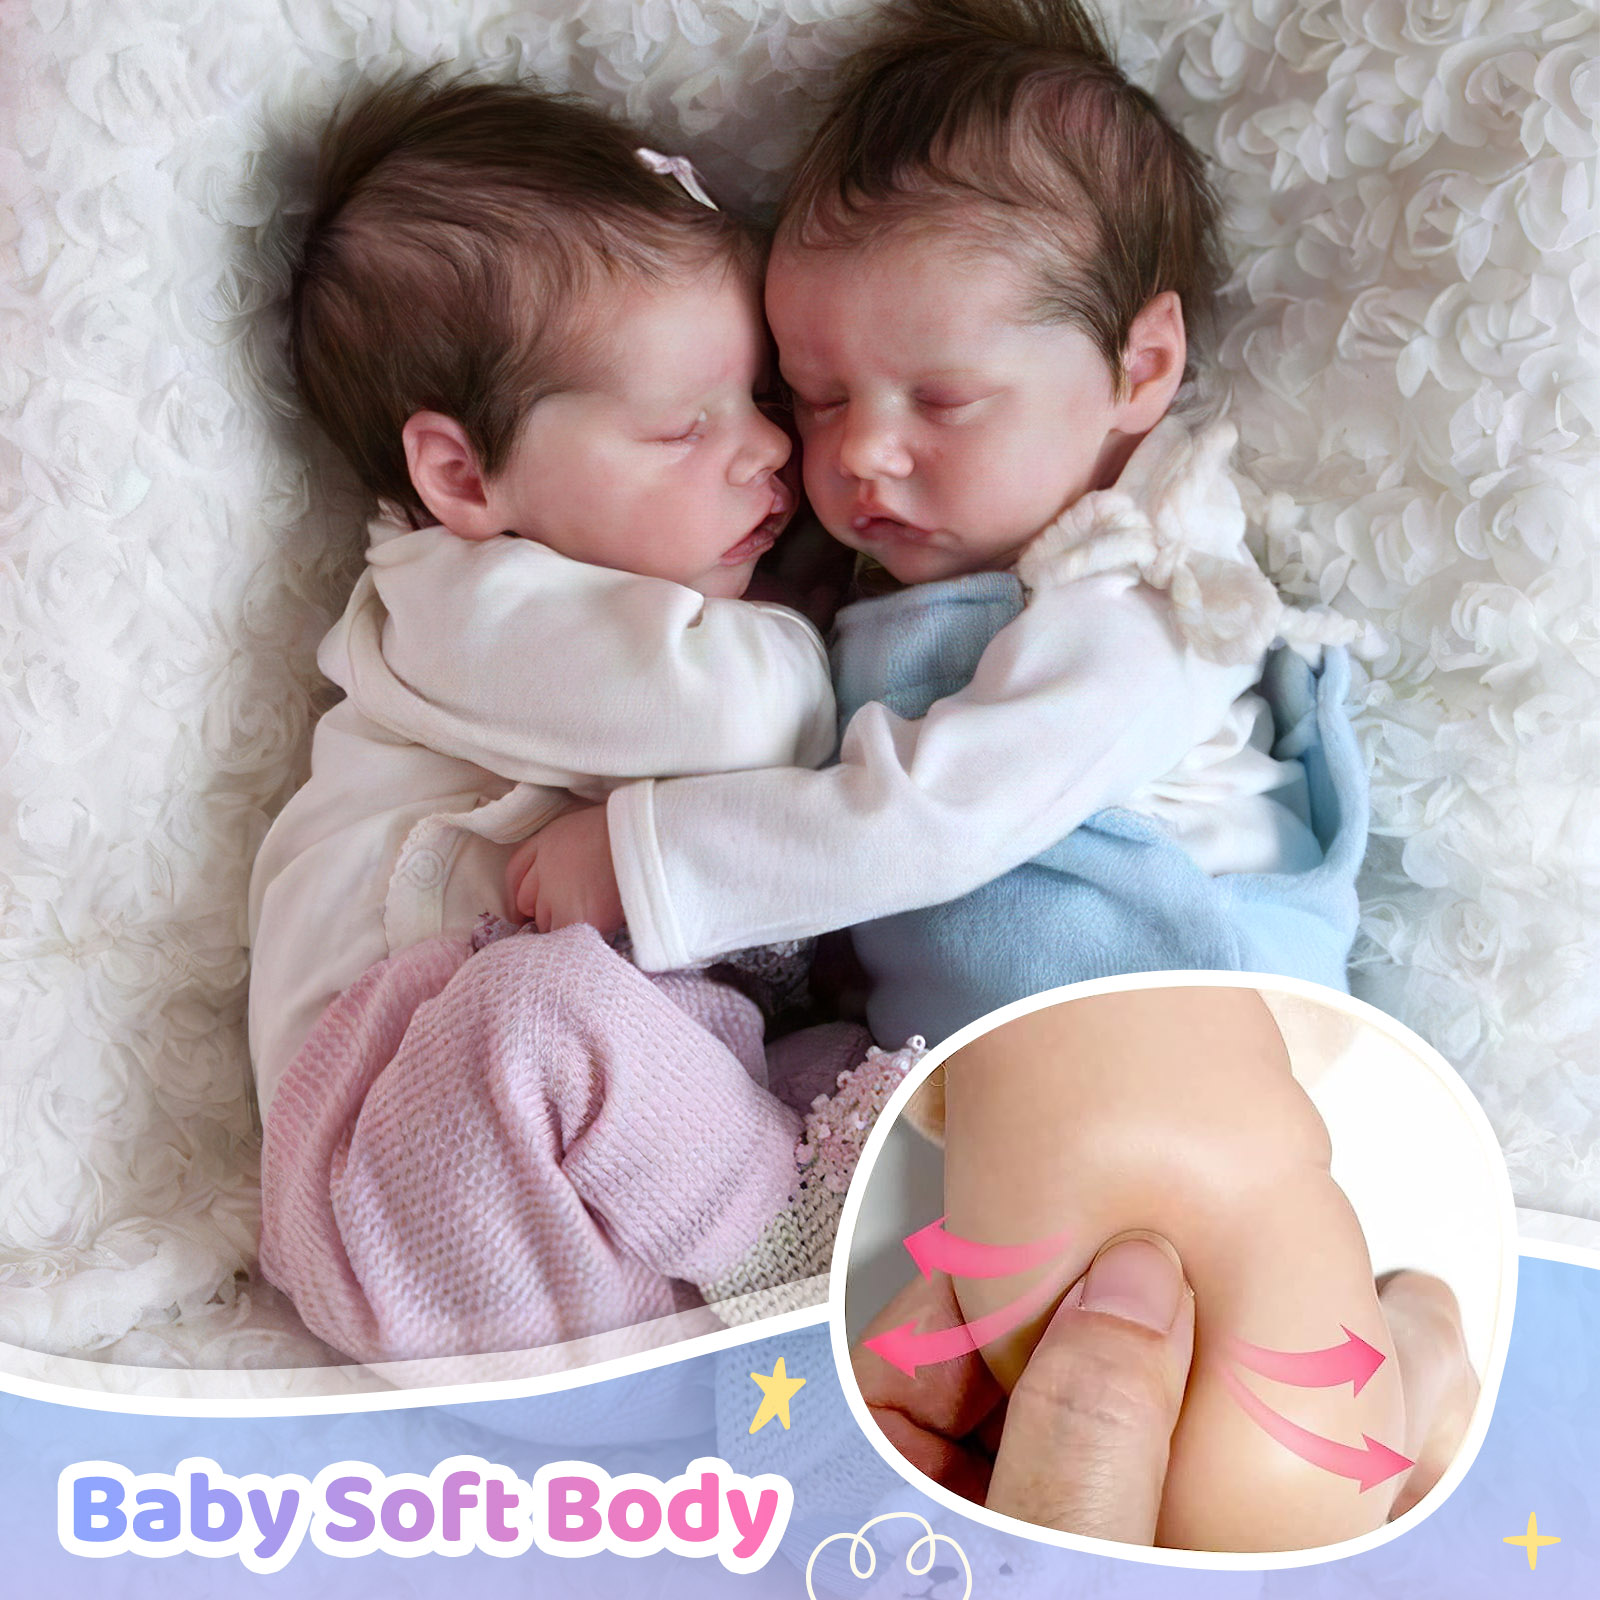 Full body silicone baby twins (girls) 12 – Reborn & Silicone Dolls by  Nadine